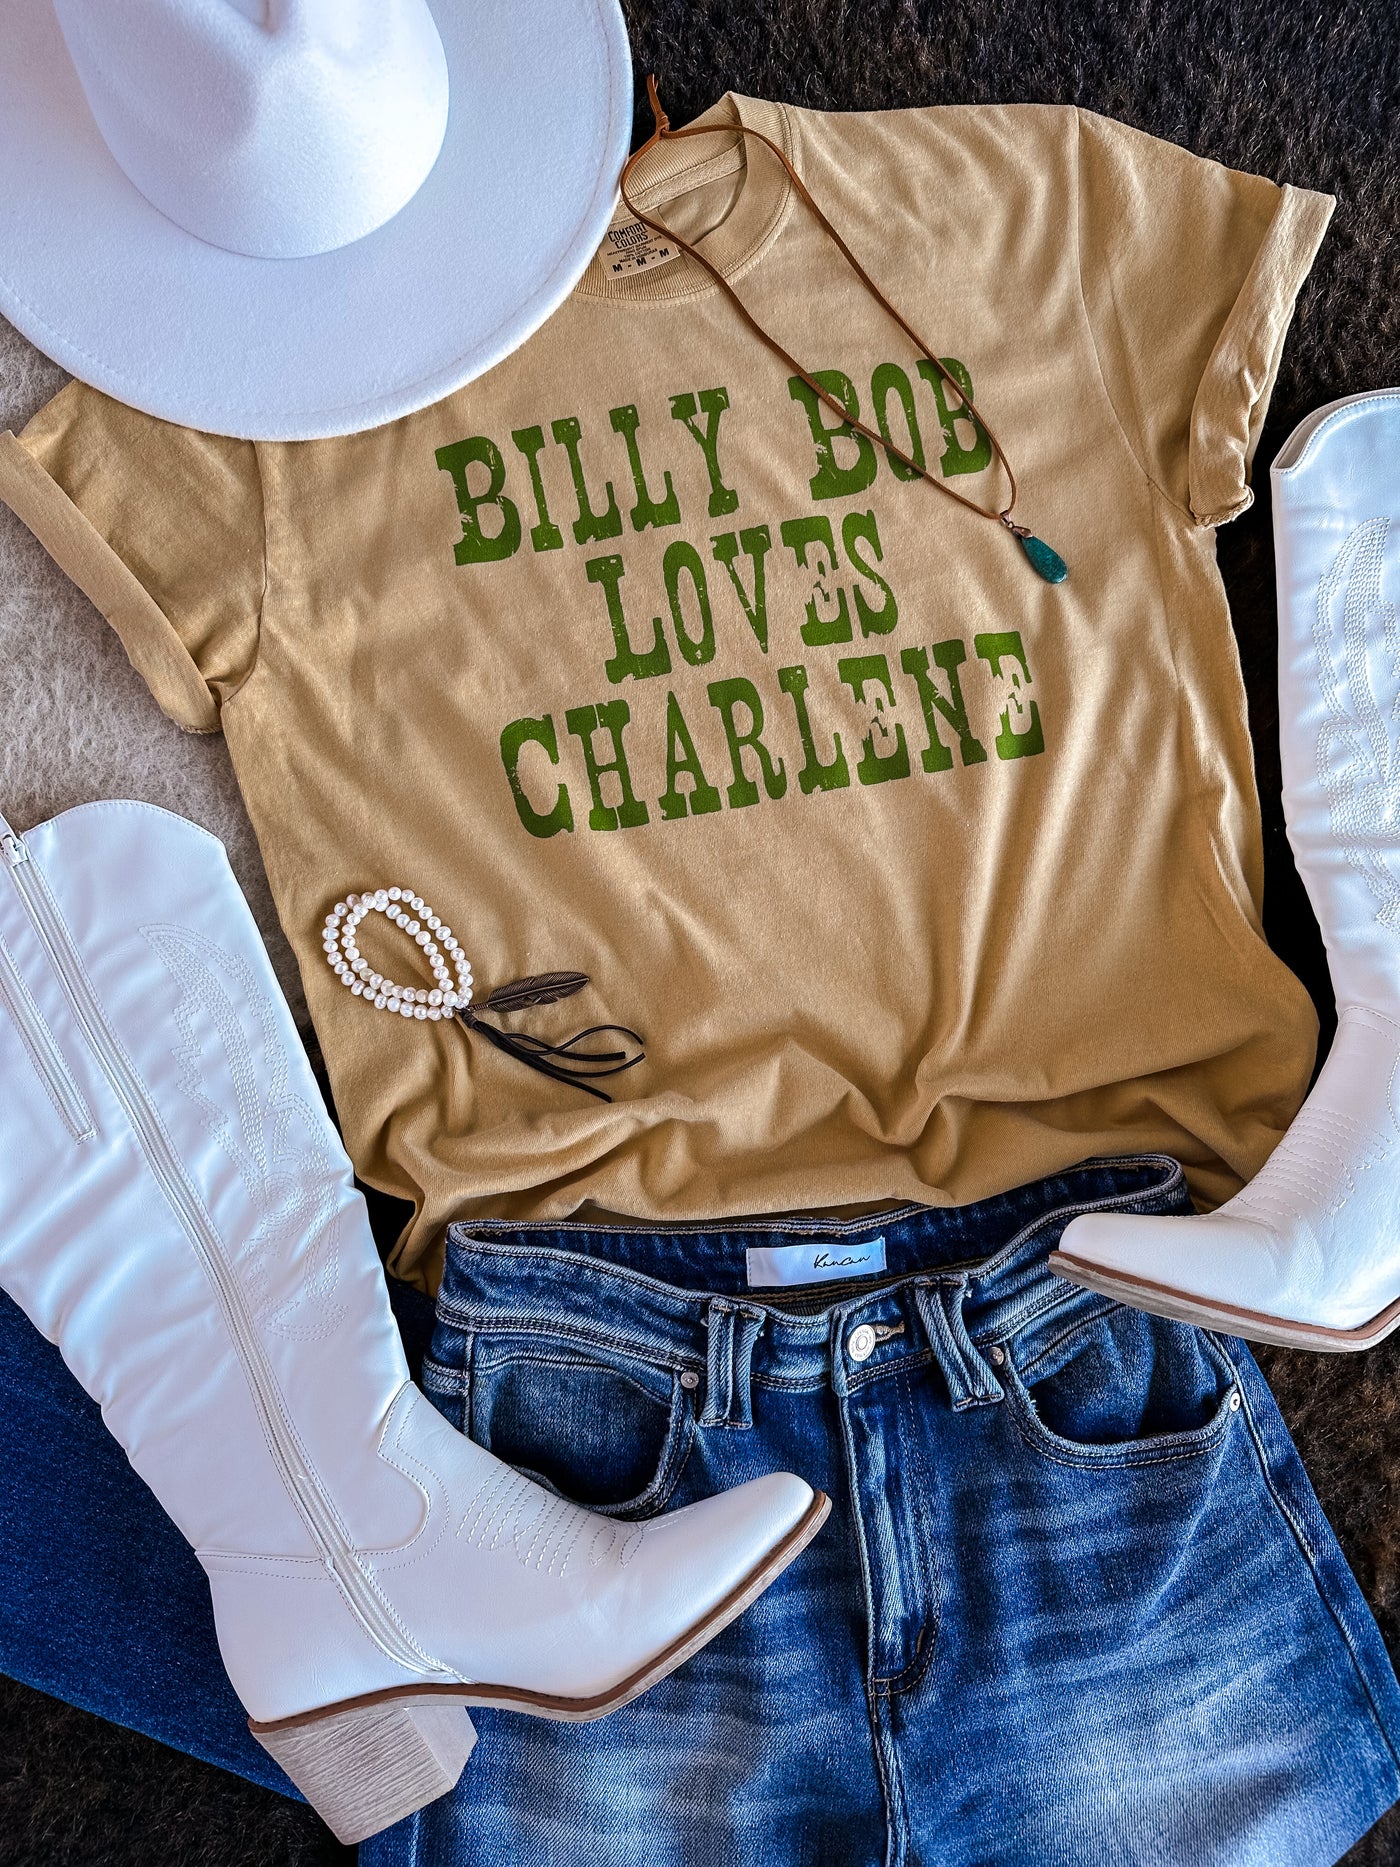 Billy Bob Loves Charlene Tee/Long Sleeve Shirt